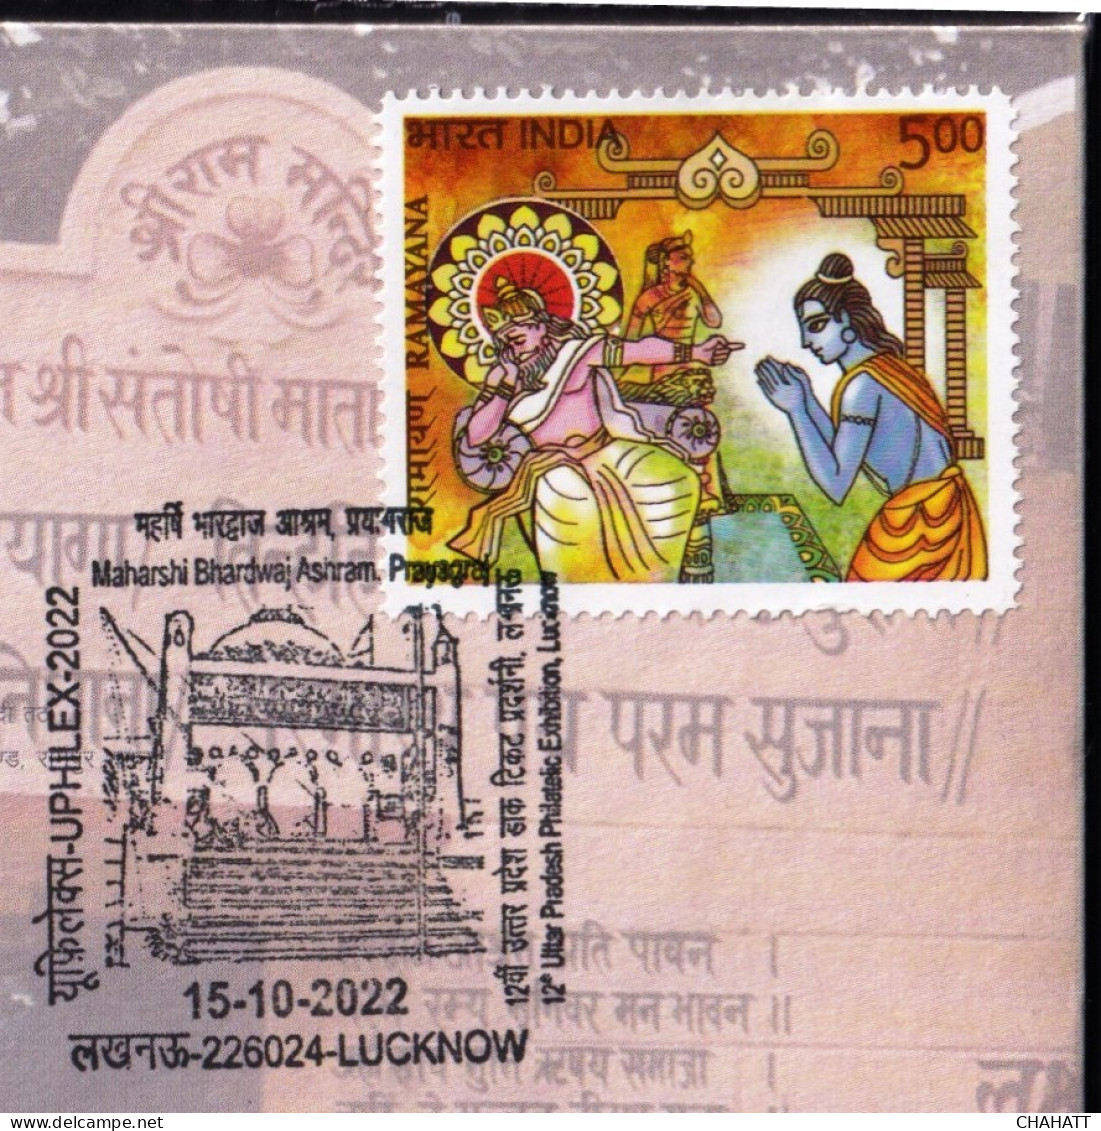 HINDUISM - RAMAYAN- MAHARSHI BHARDWAJ ASHRAM, PRAYAGRAJ - PICTORIAL CANCELLATION - SPECIAL COVER - INDIA -2022- BX4-23 - Hinduismo